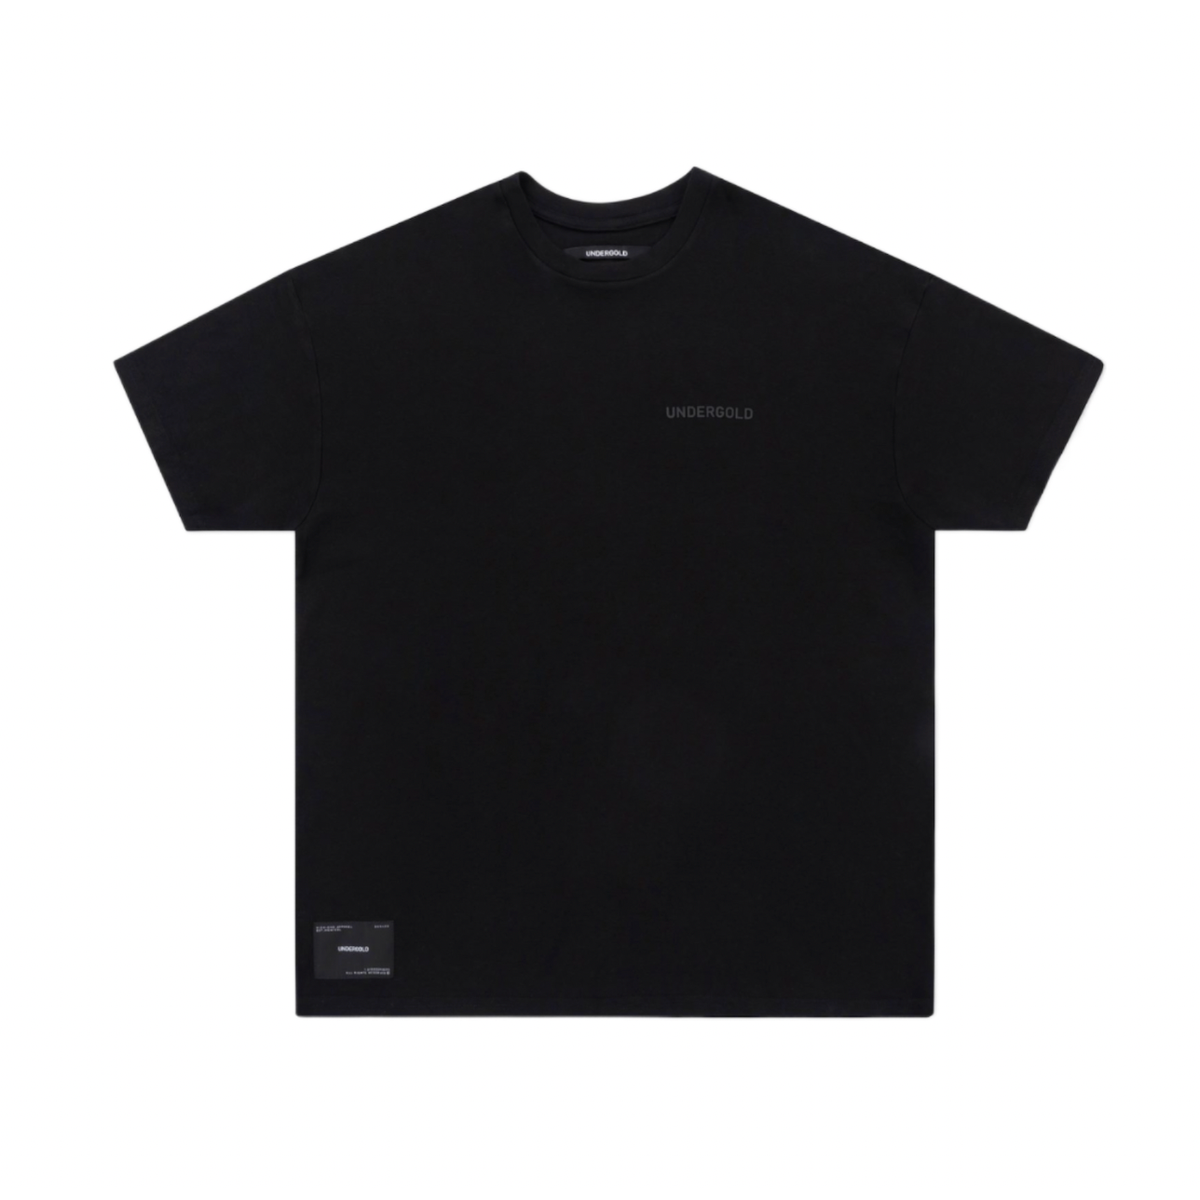 Undergold Basic Black T-shirt